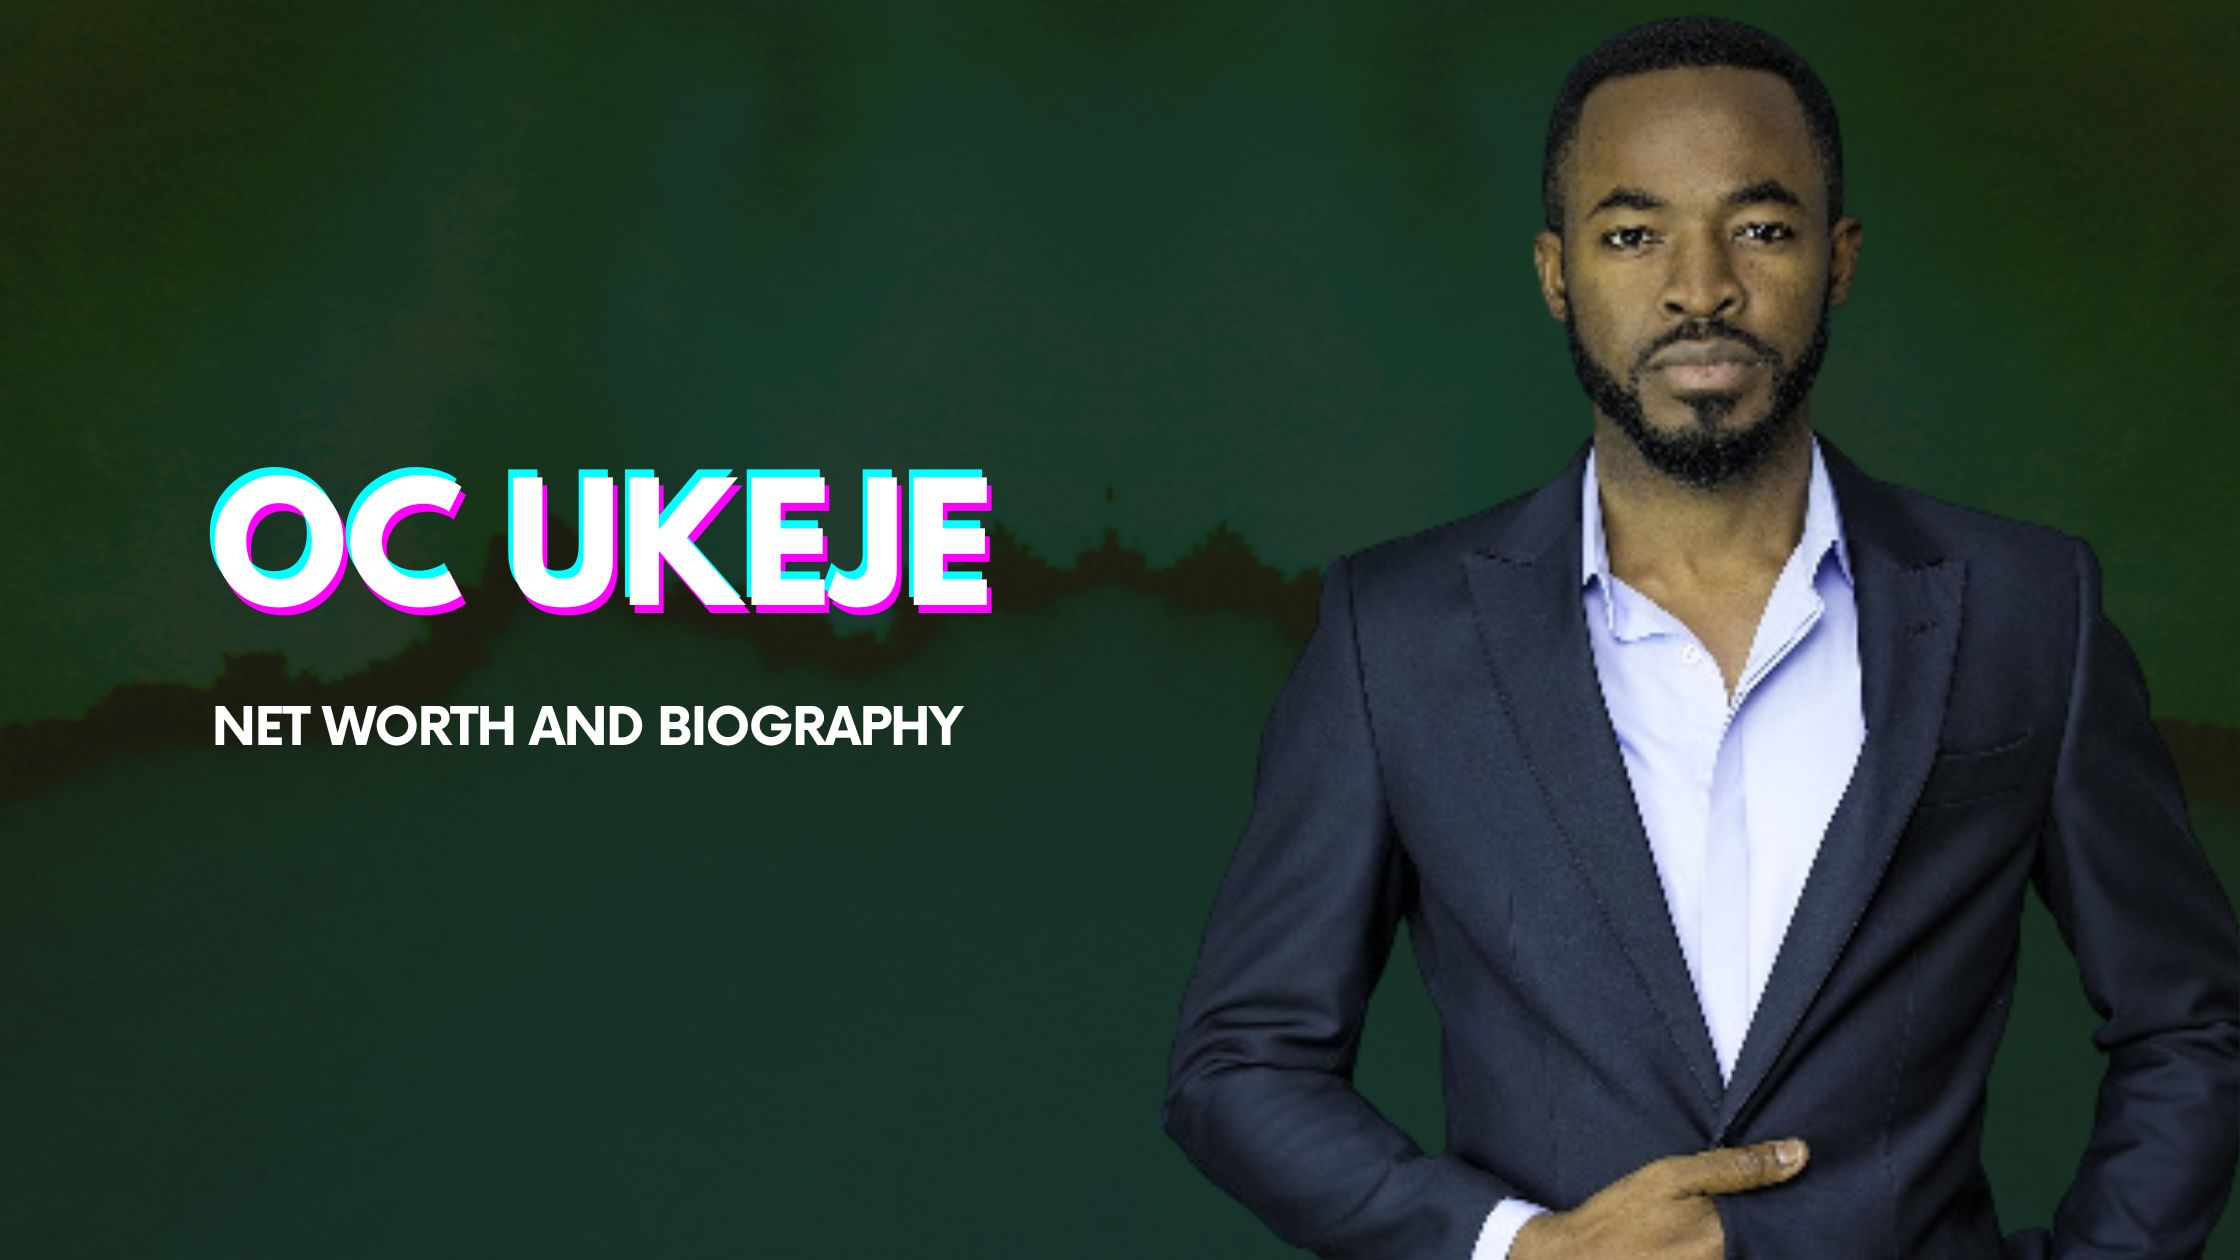 OC Ukeje Net Worth And Biography